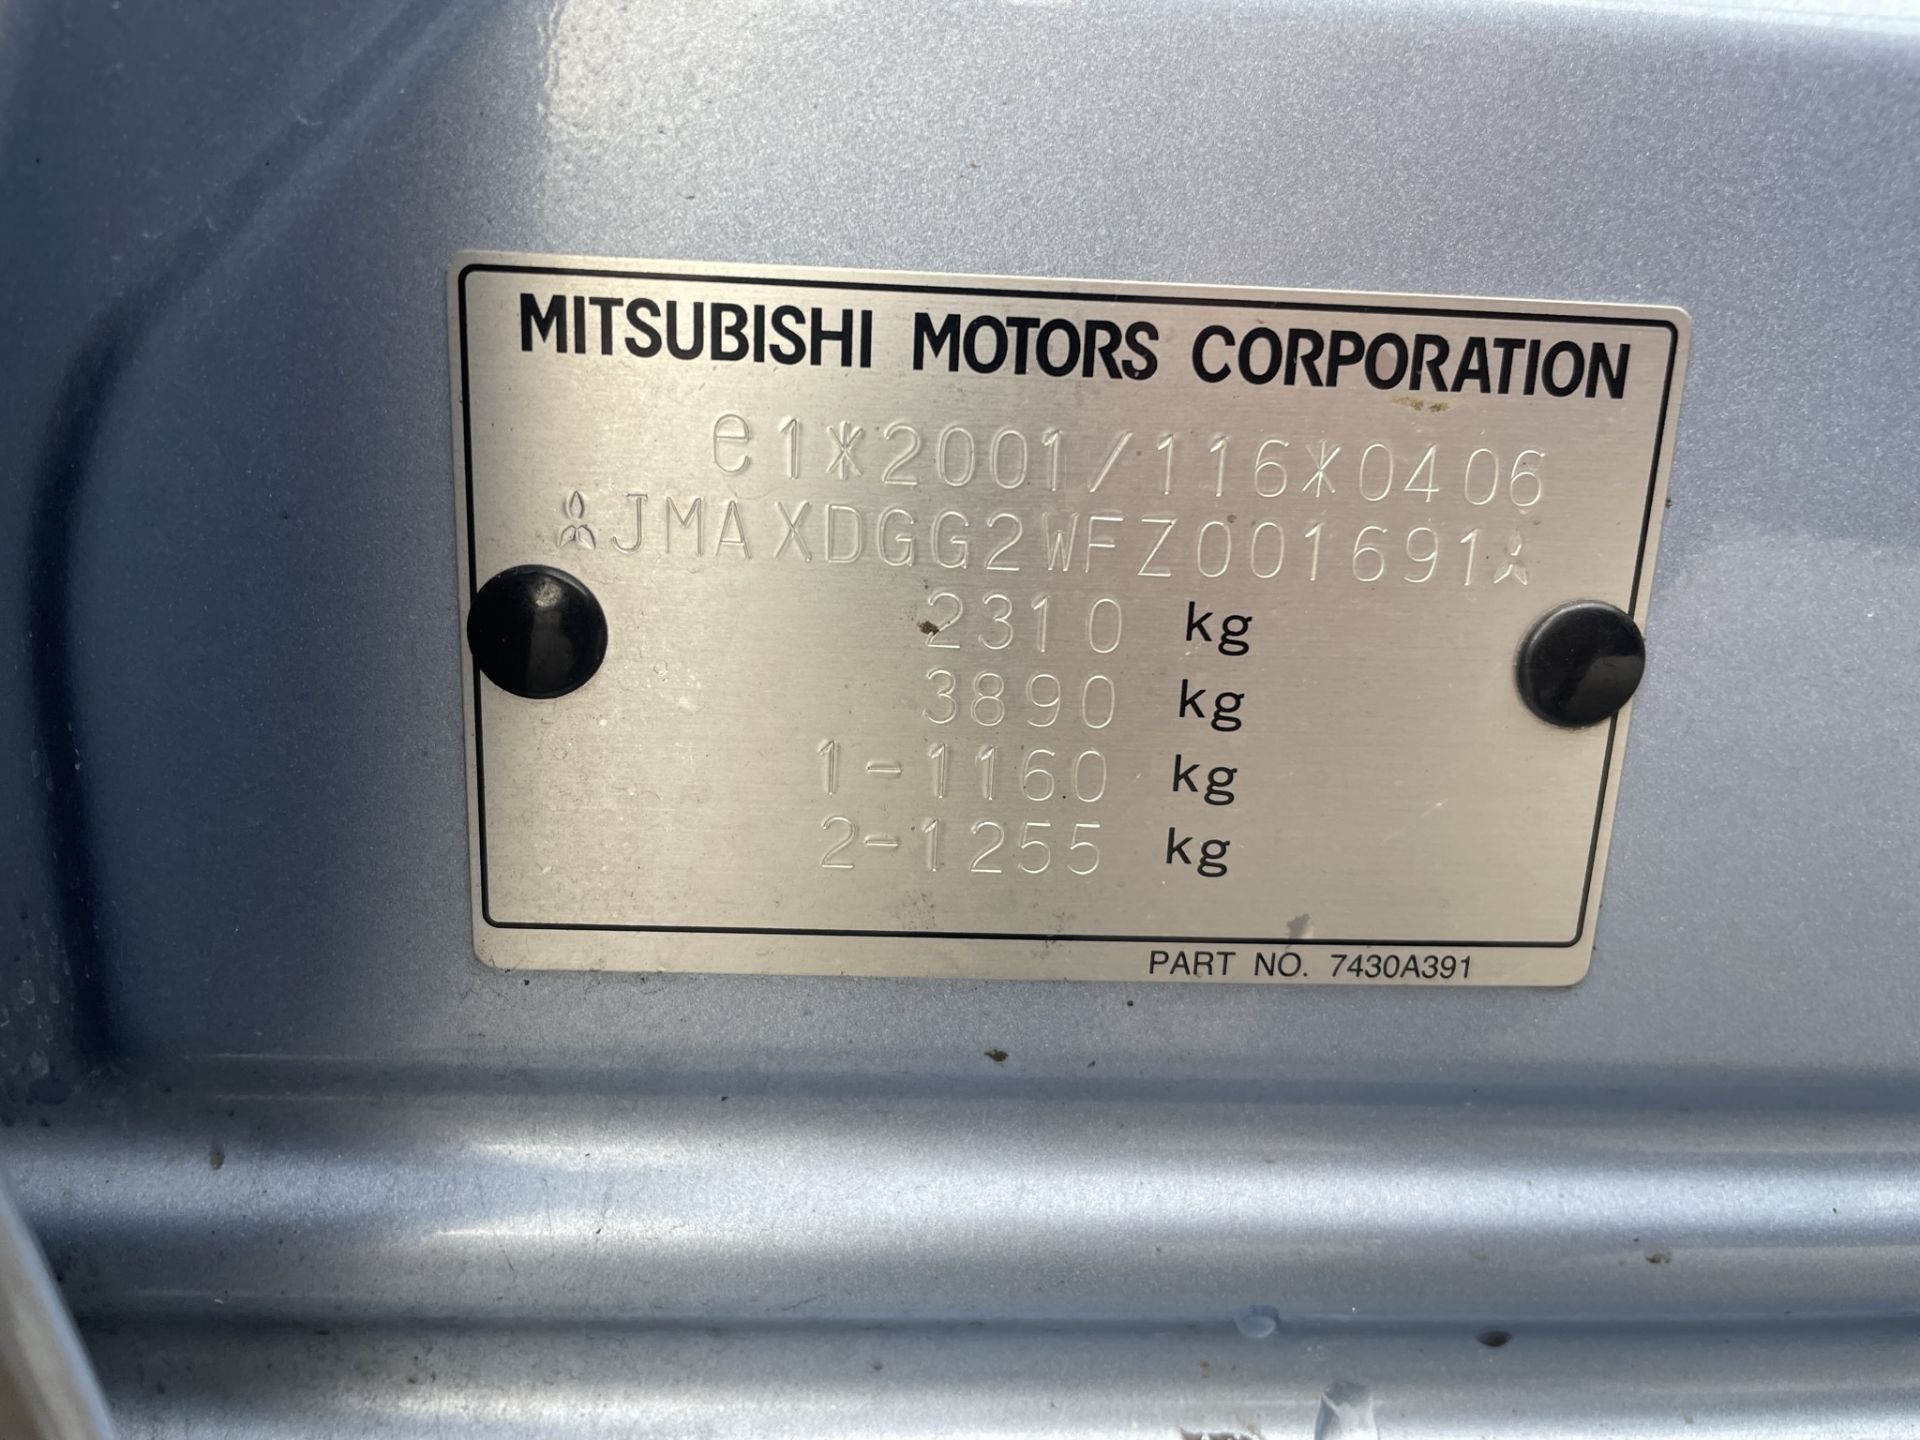 Mitsubishi Outlander Estate 2.0 PHEV GX4H 5DR Auto (1998 cc) | MJ15 CVS | 45,865 Miles - Image 10 of 17